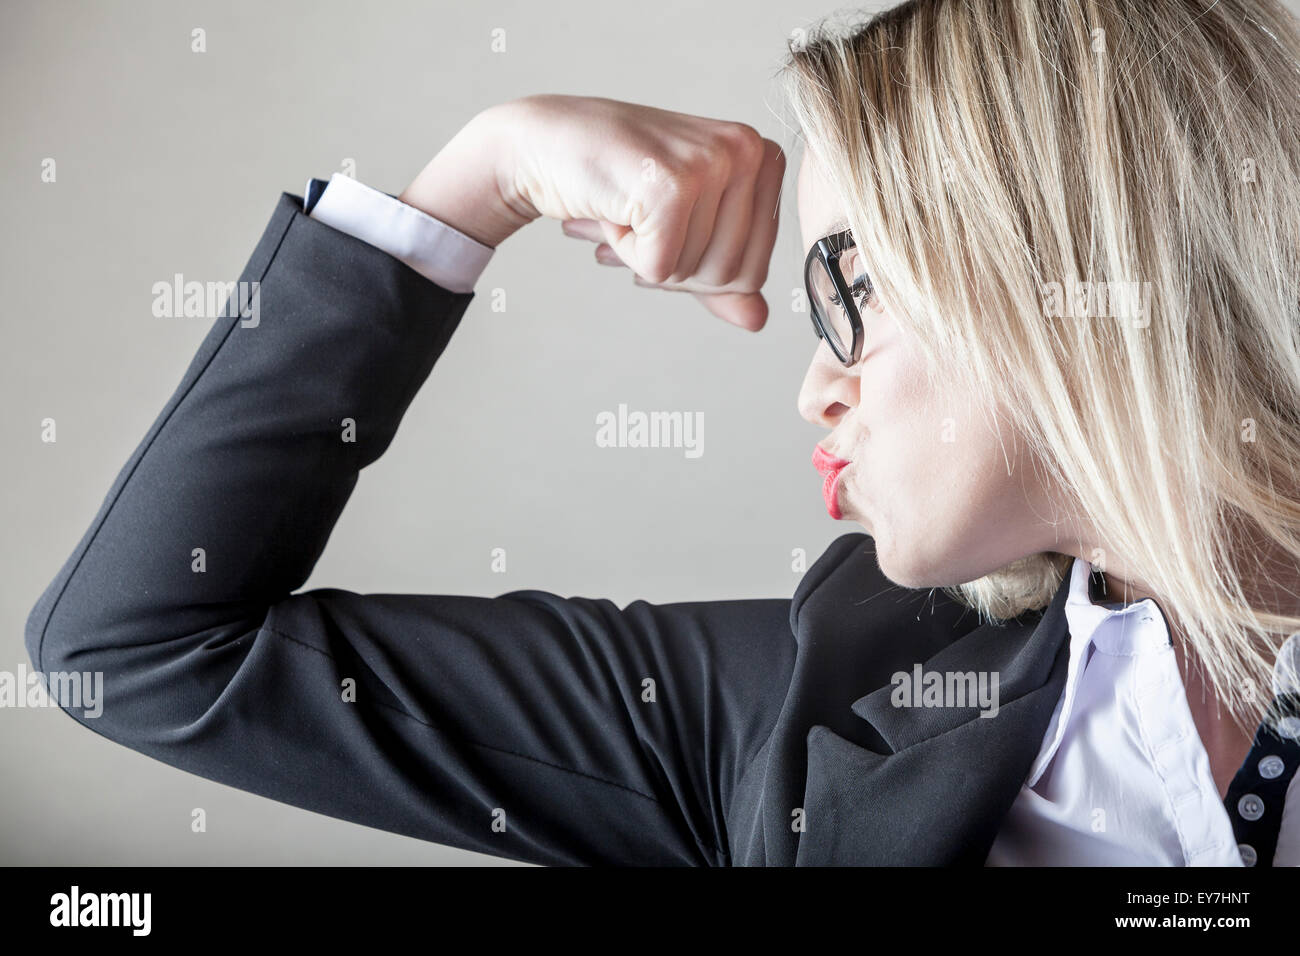 Businesswoman pursing lips and clenching fist Stock Photo